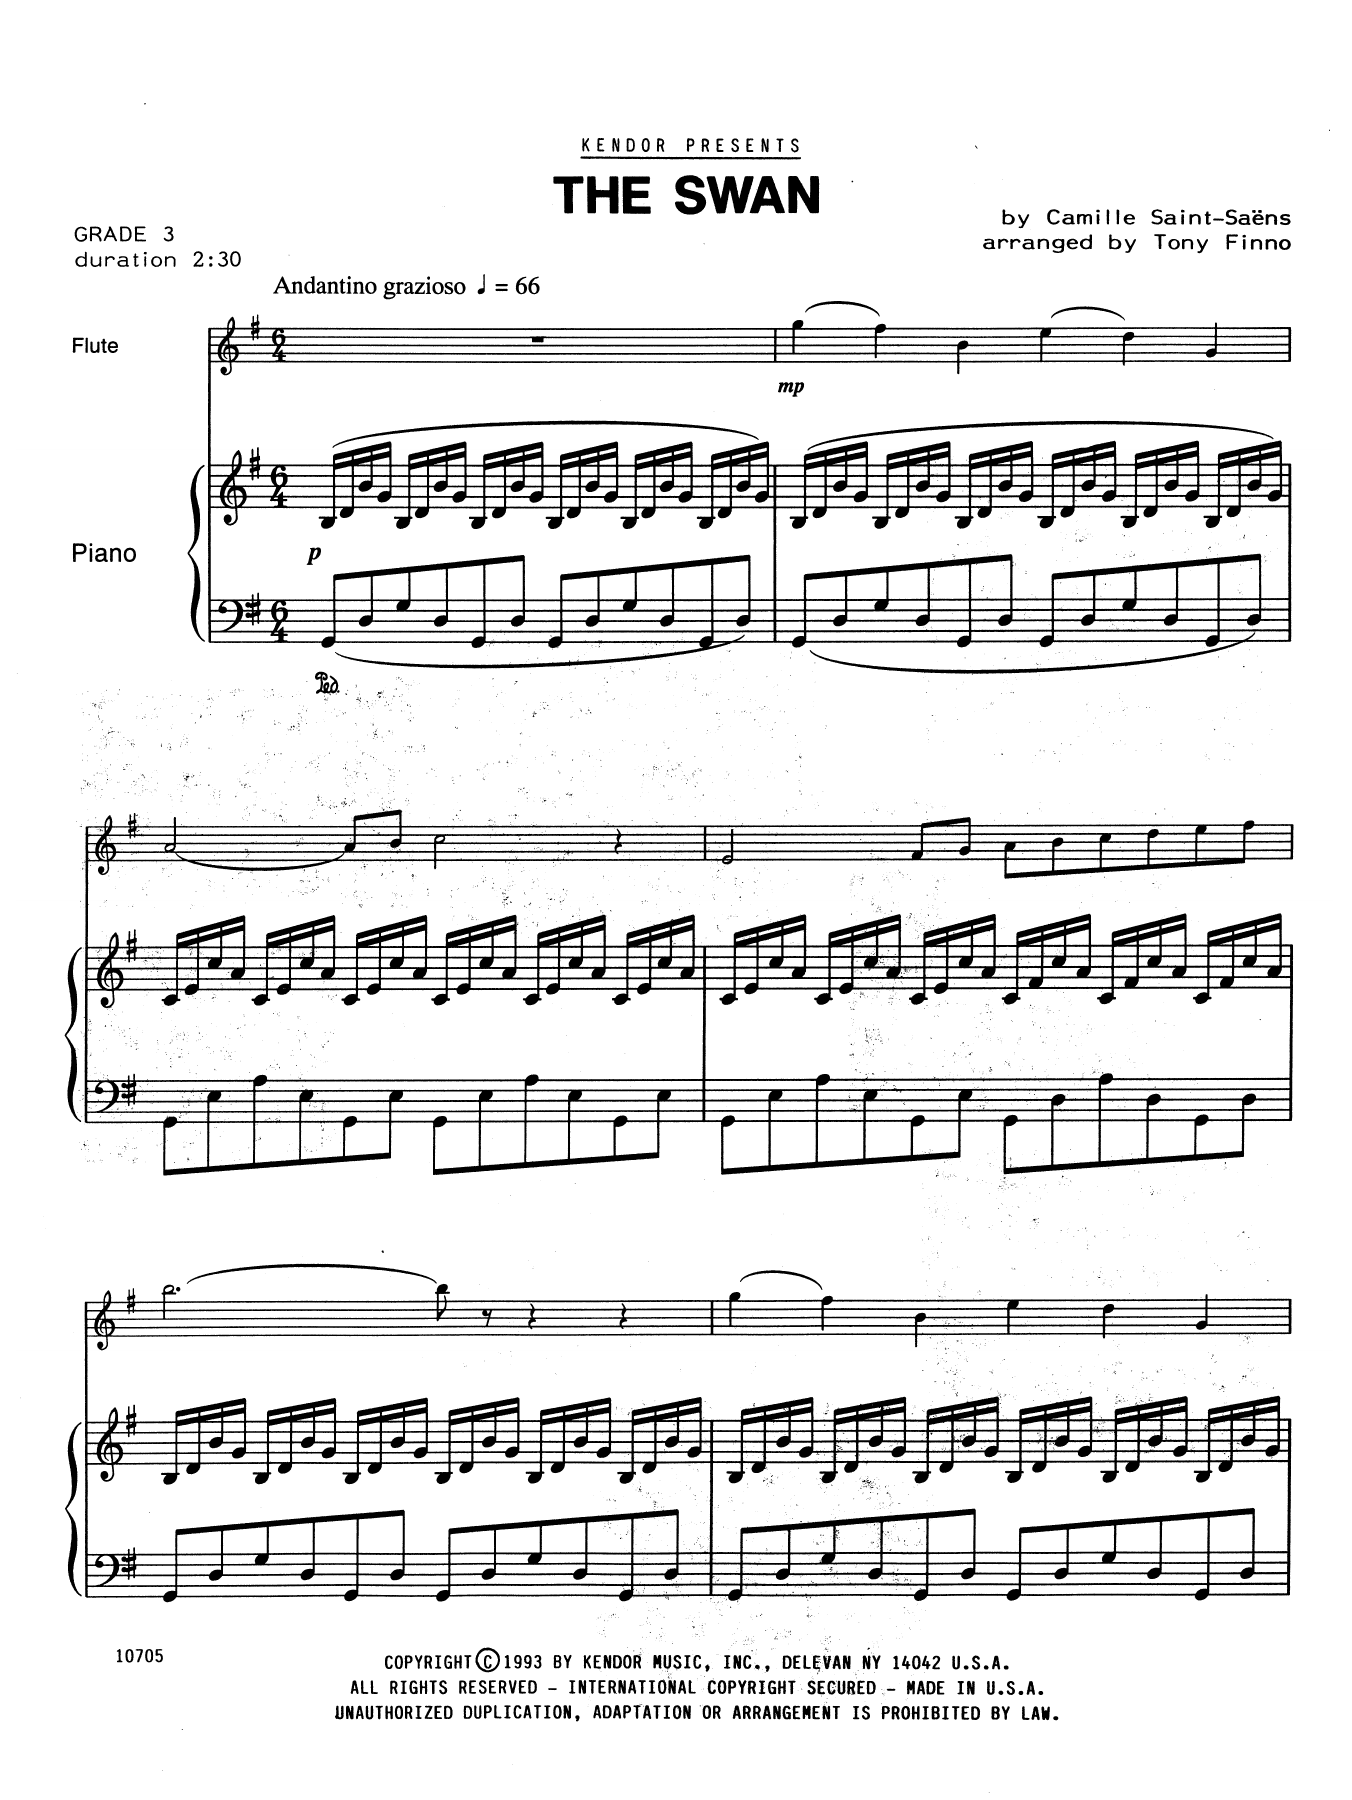 Download Tony Finno The Swan - Piano (optional) Sheet Music